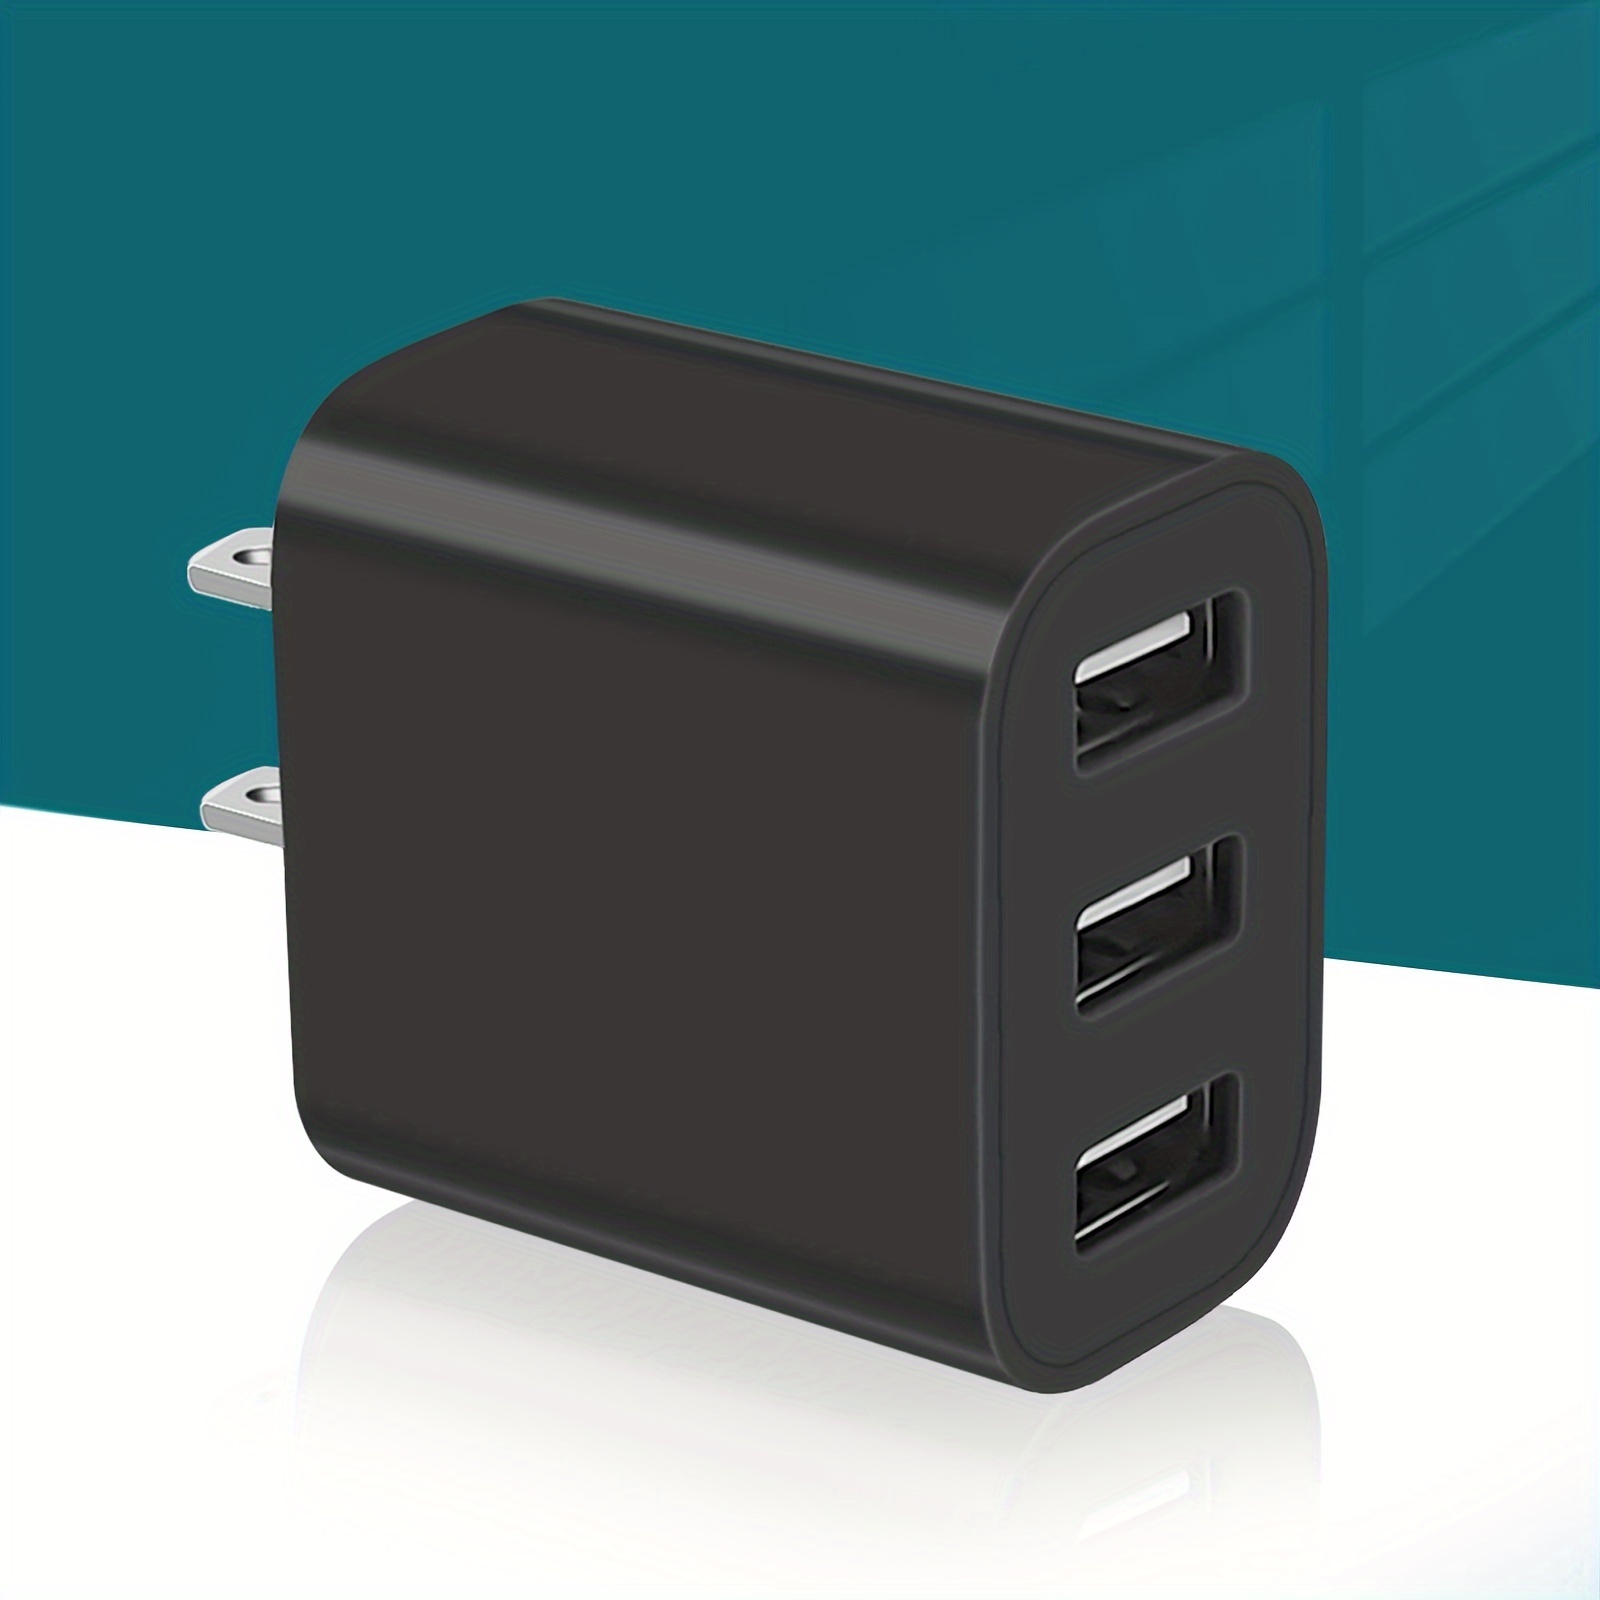 Adaptador de enchufe USB con tira de alimentación doble, 2 enchufes de la  UE, 5V, 2a, pared múltiple, portátil, 2 puertos USB, hogar inteligente,  nuevo